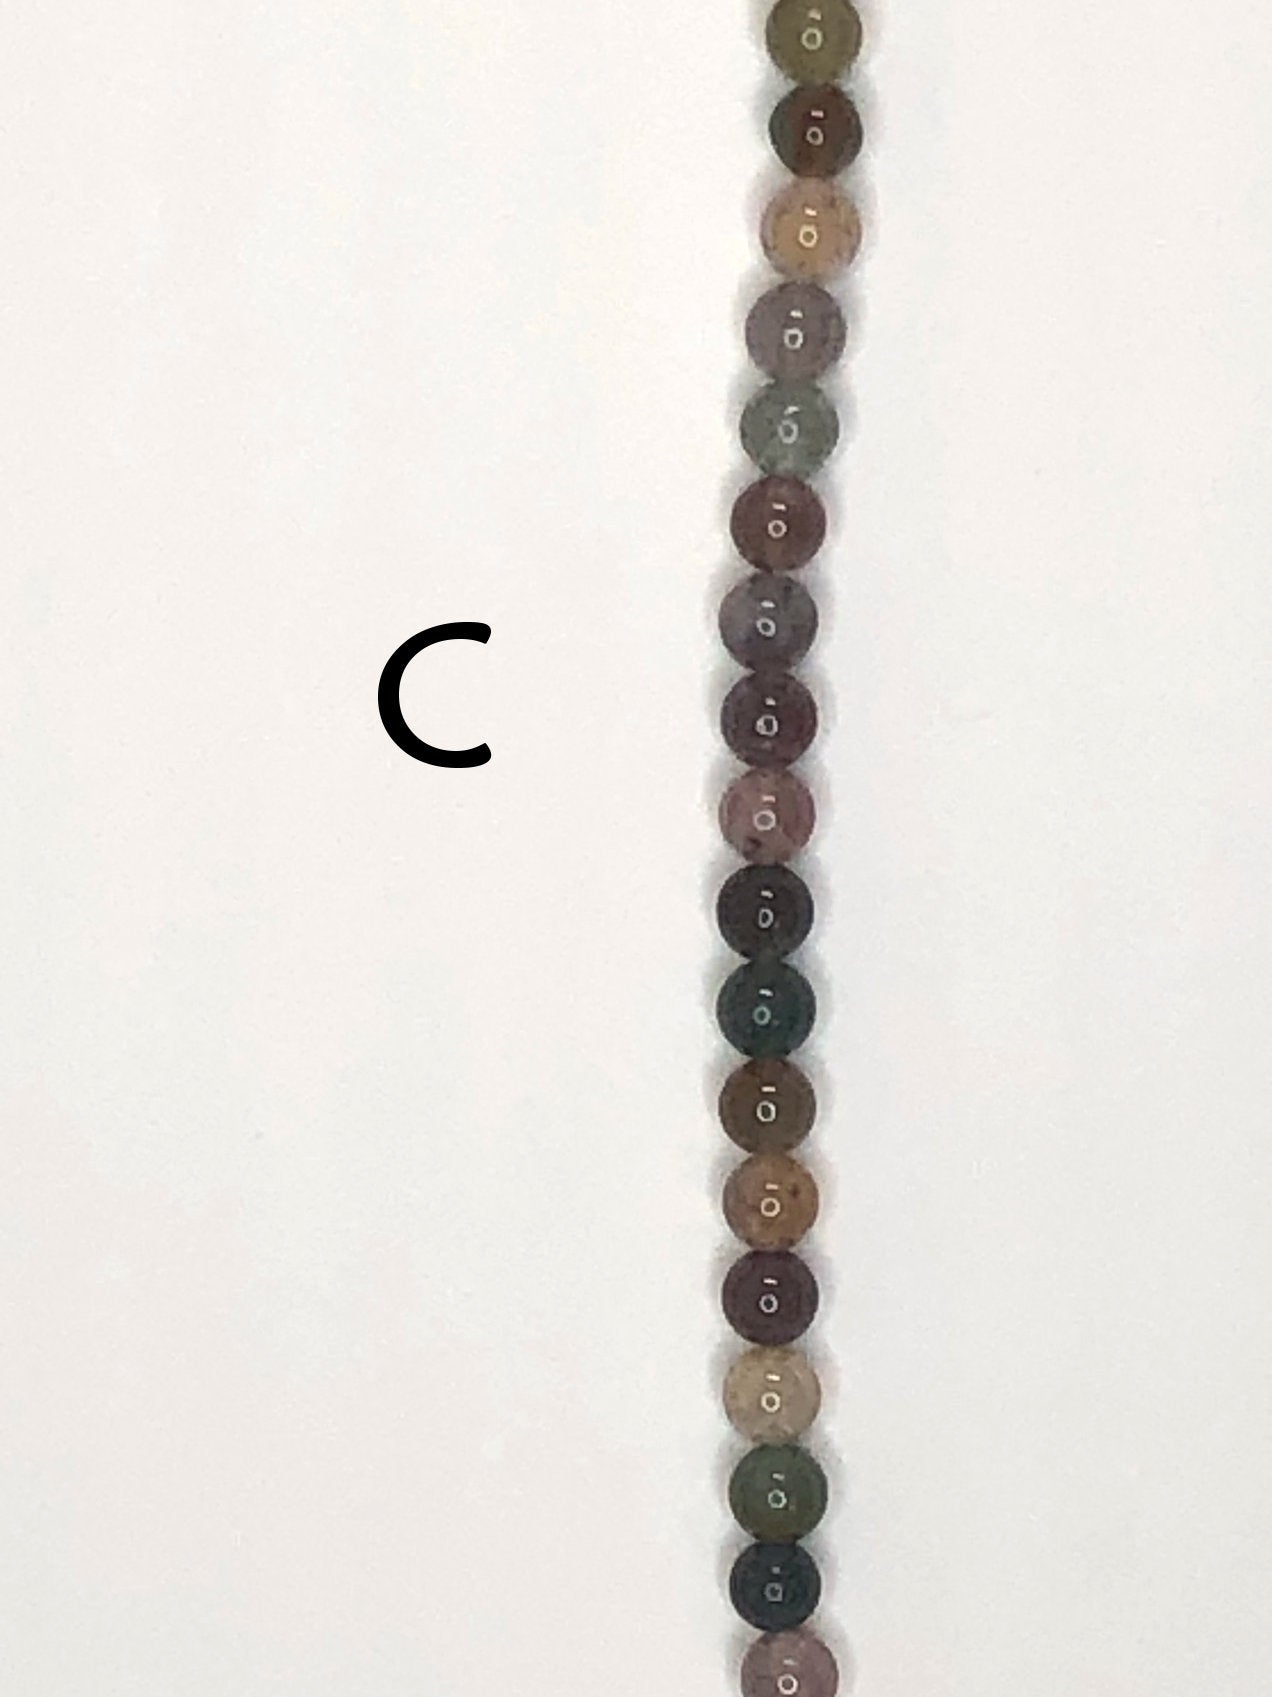 Bead Gallery Fancy Jasper Semi-Precious Stone Round Beads, 3 mm - 40 Beads - Strand A, B or C